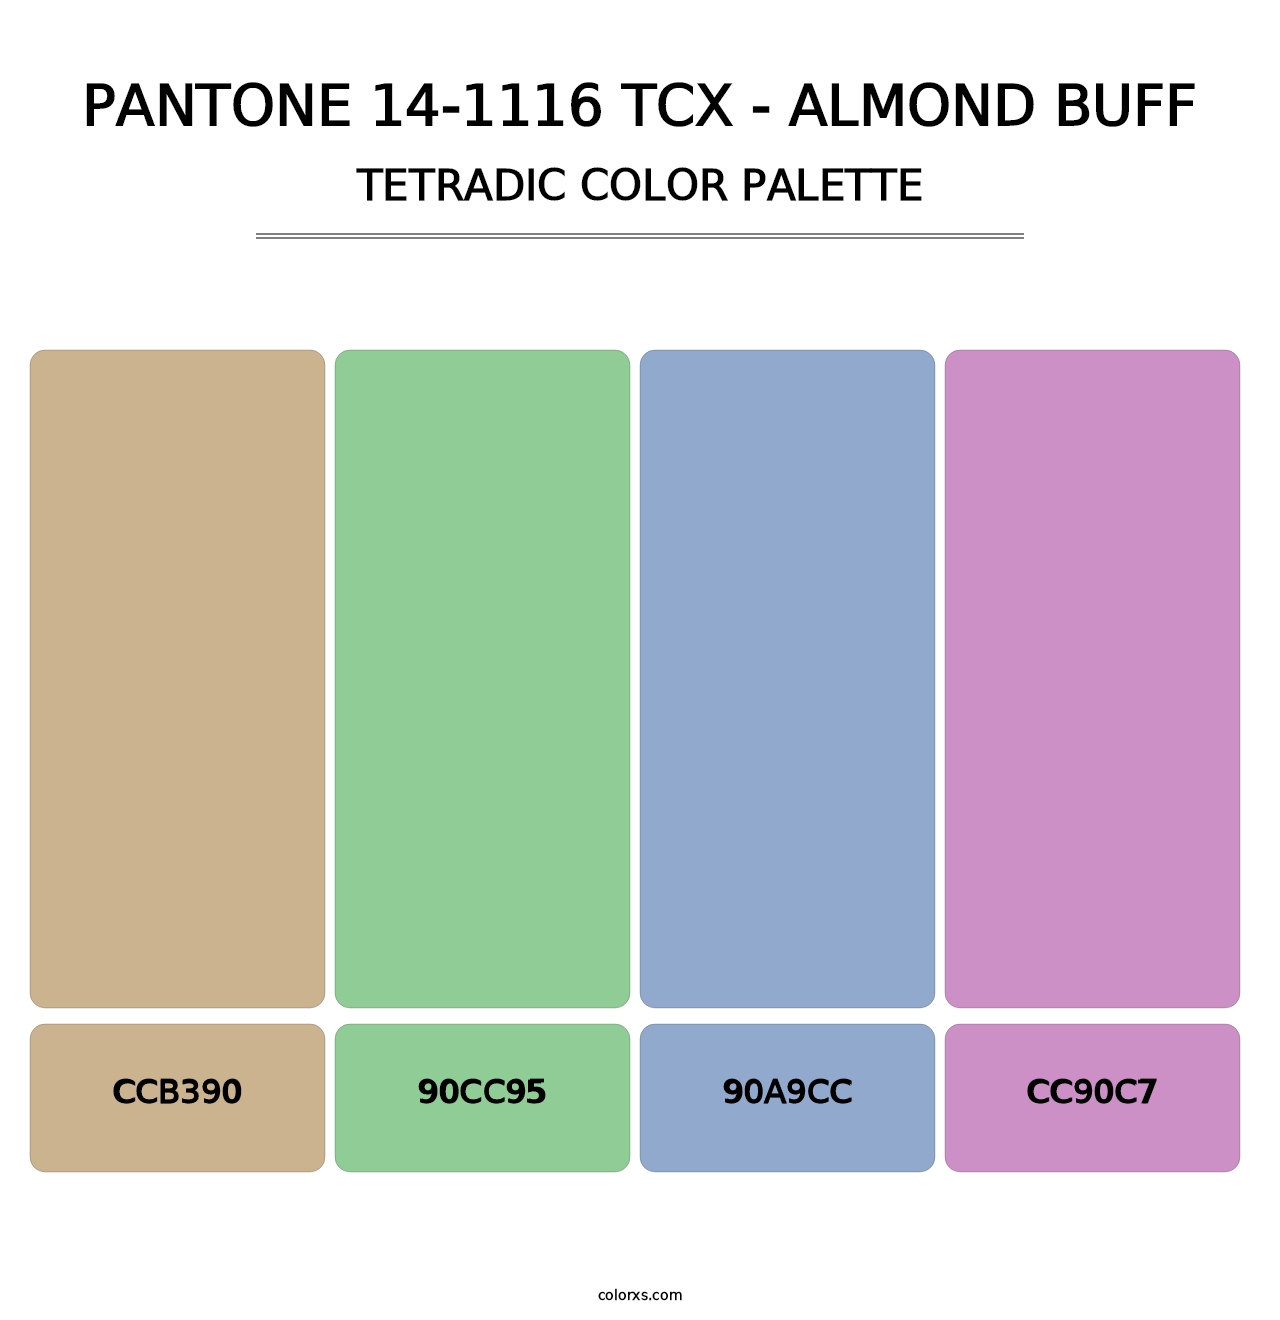 PANTONE 14-1116 TCX - Almond Buff - Tetradic Color Palette